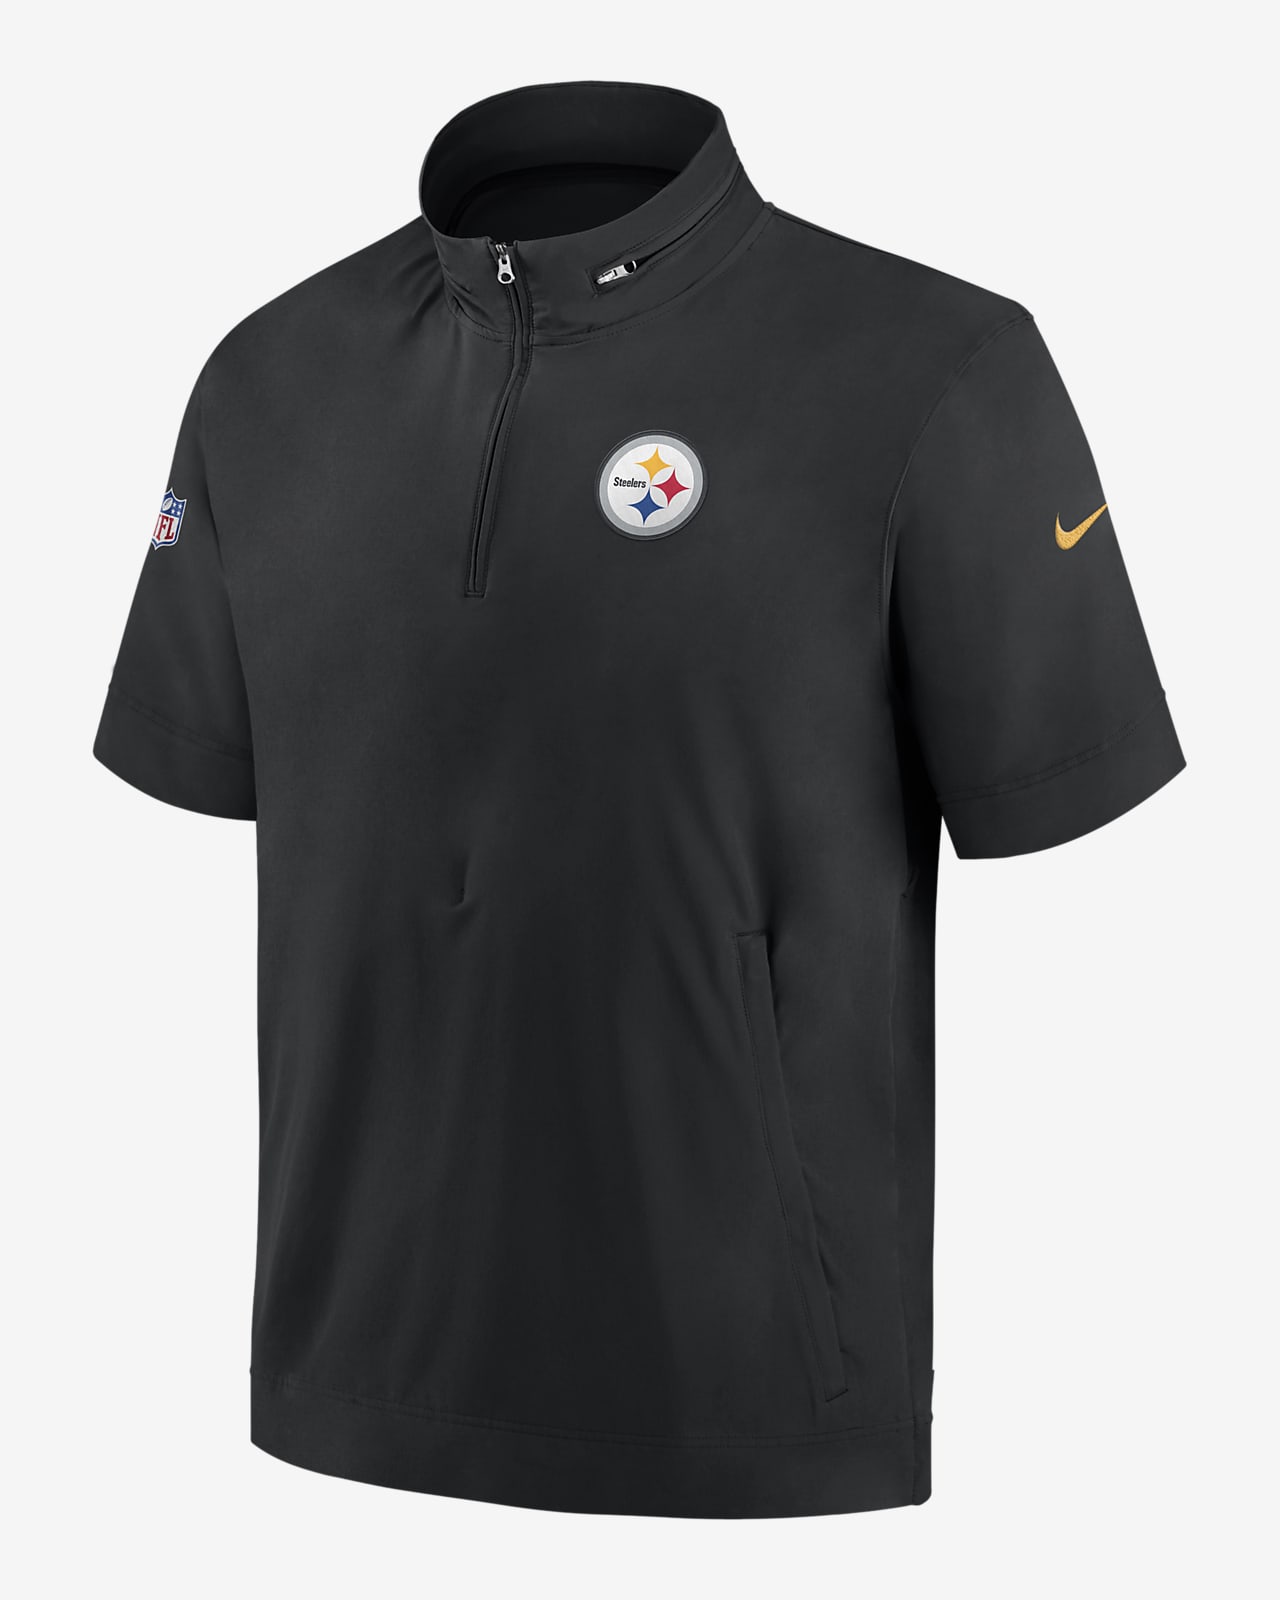 Nike Sideline Coach (NFL Pittsburgh Steelers) Men's Short-Sleeve Jacket